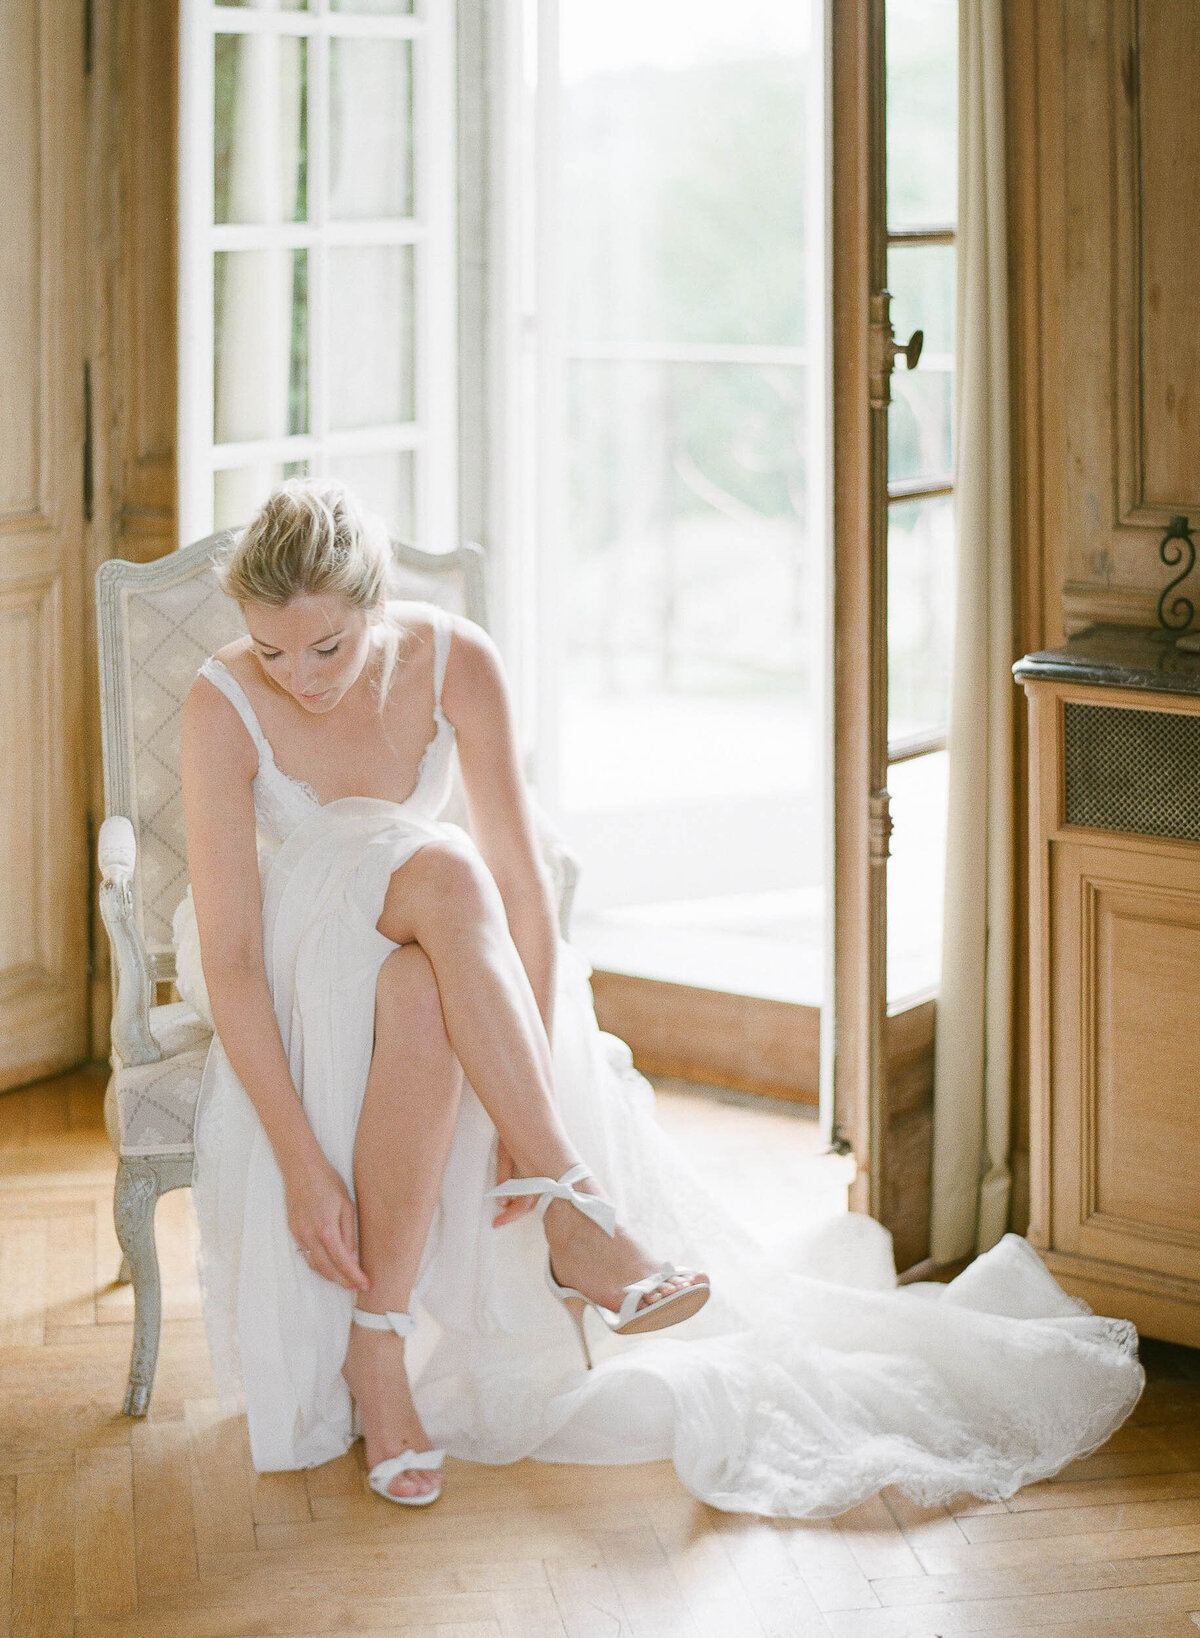 5-Alexandra-Vonk-photography-Chateau-de-la-hulpe-wedding-shoes